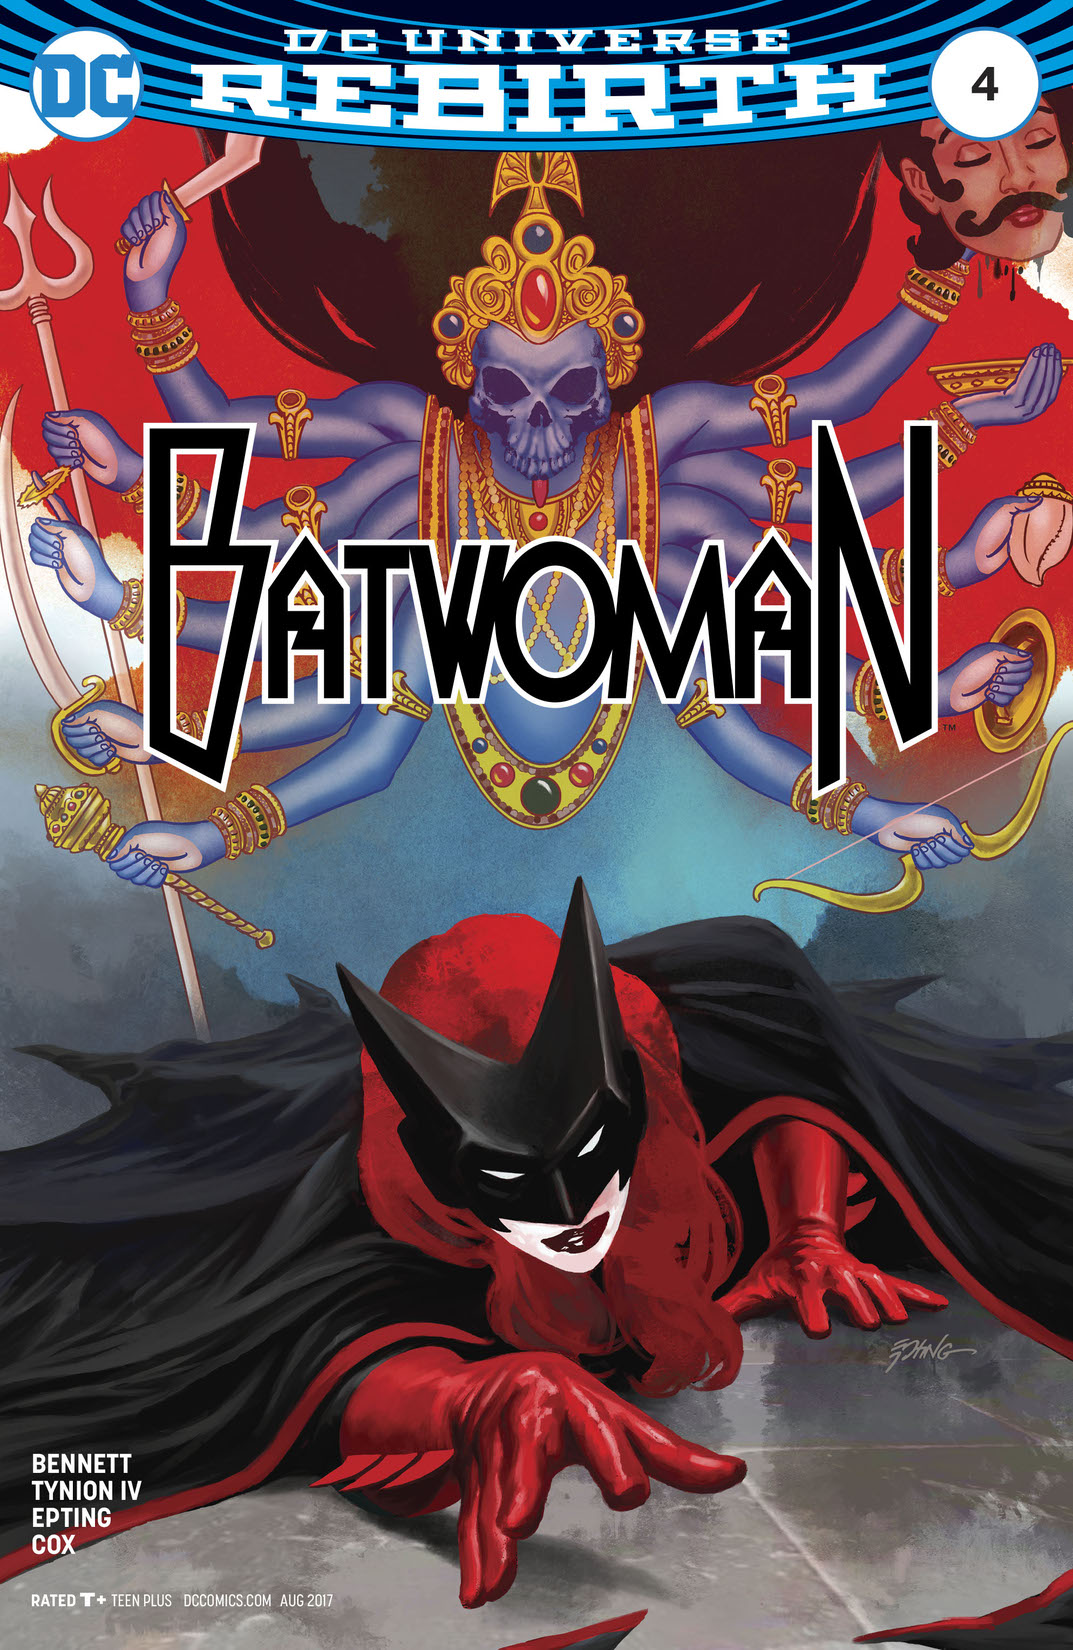 Batwoman (2017-) #4 preview images